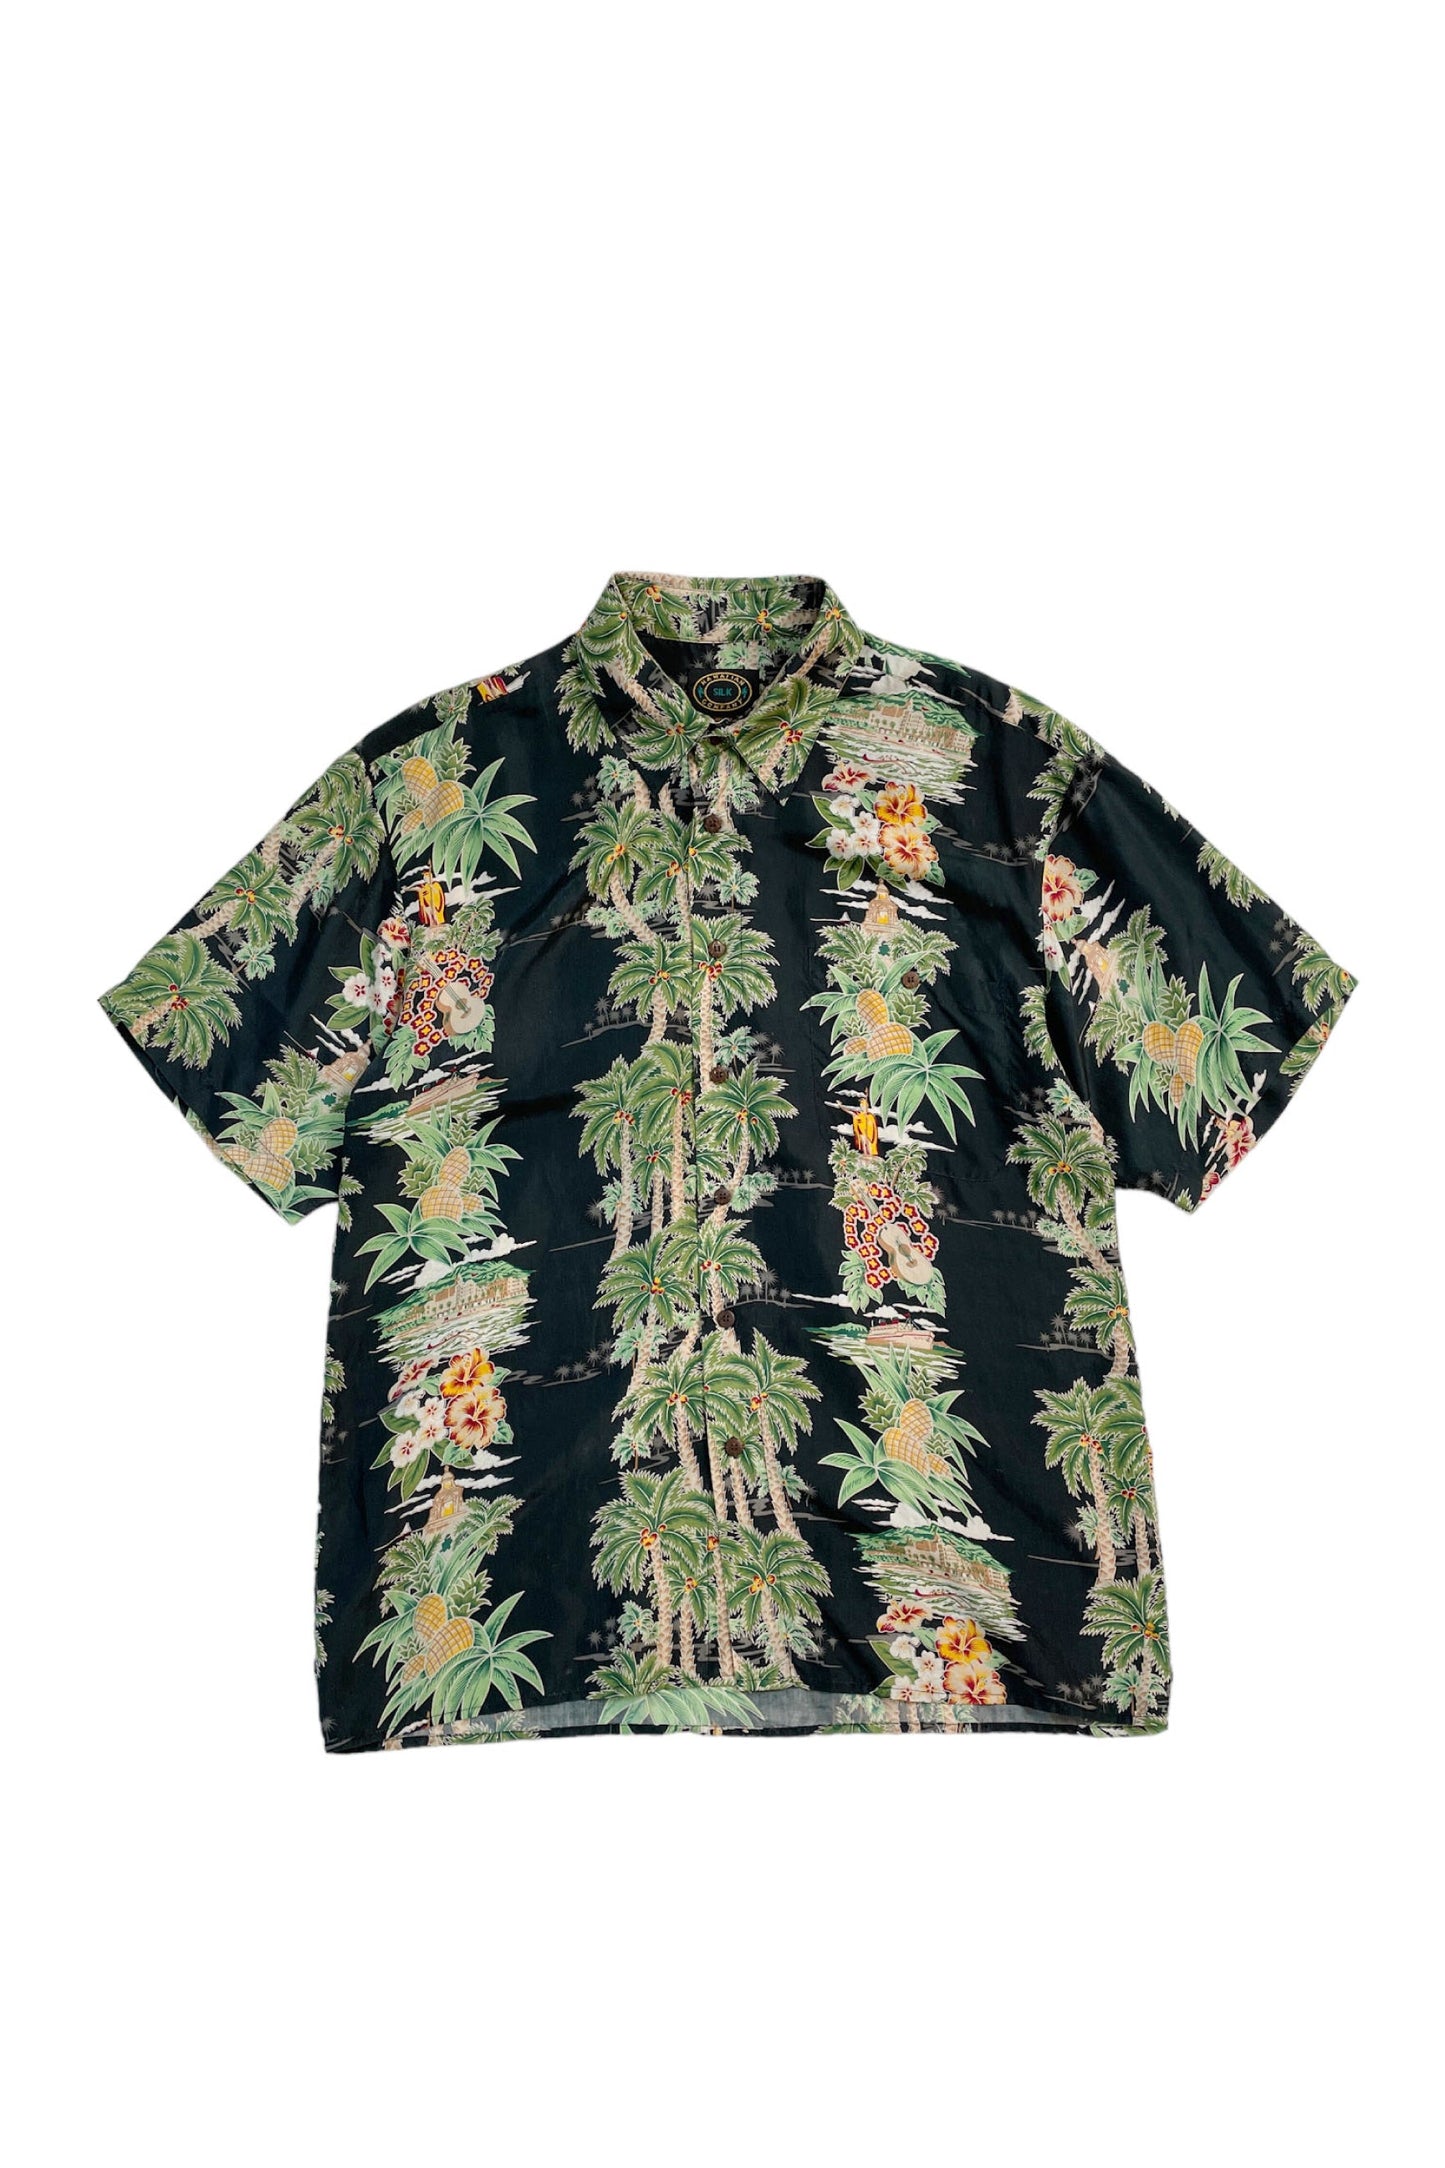 HAWAIIAN COMPANY SILK aloha shirt